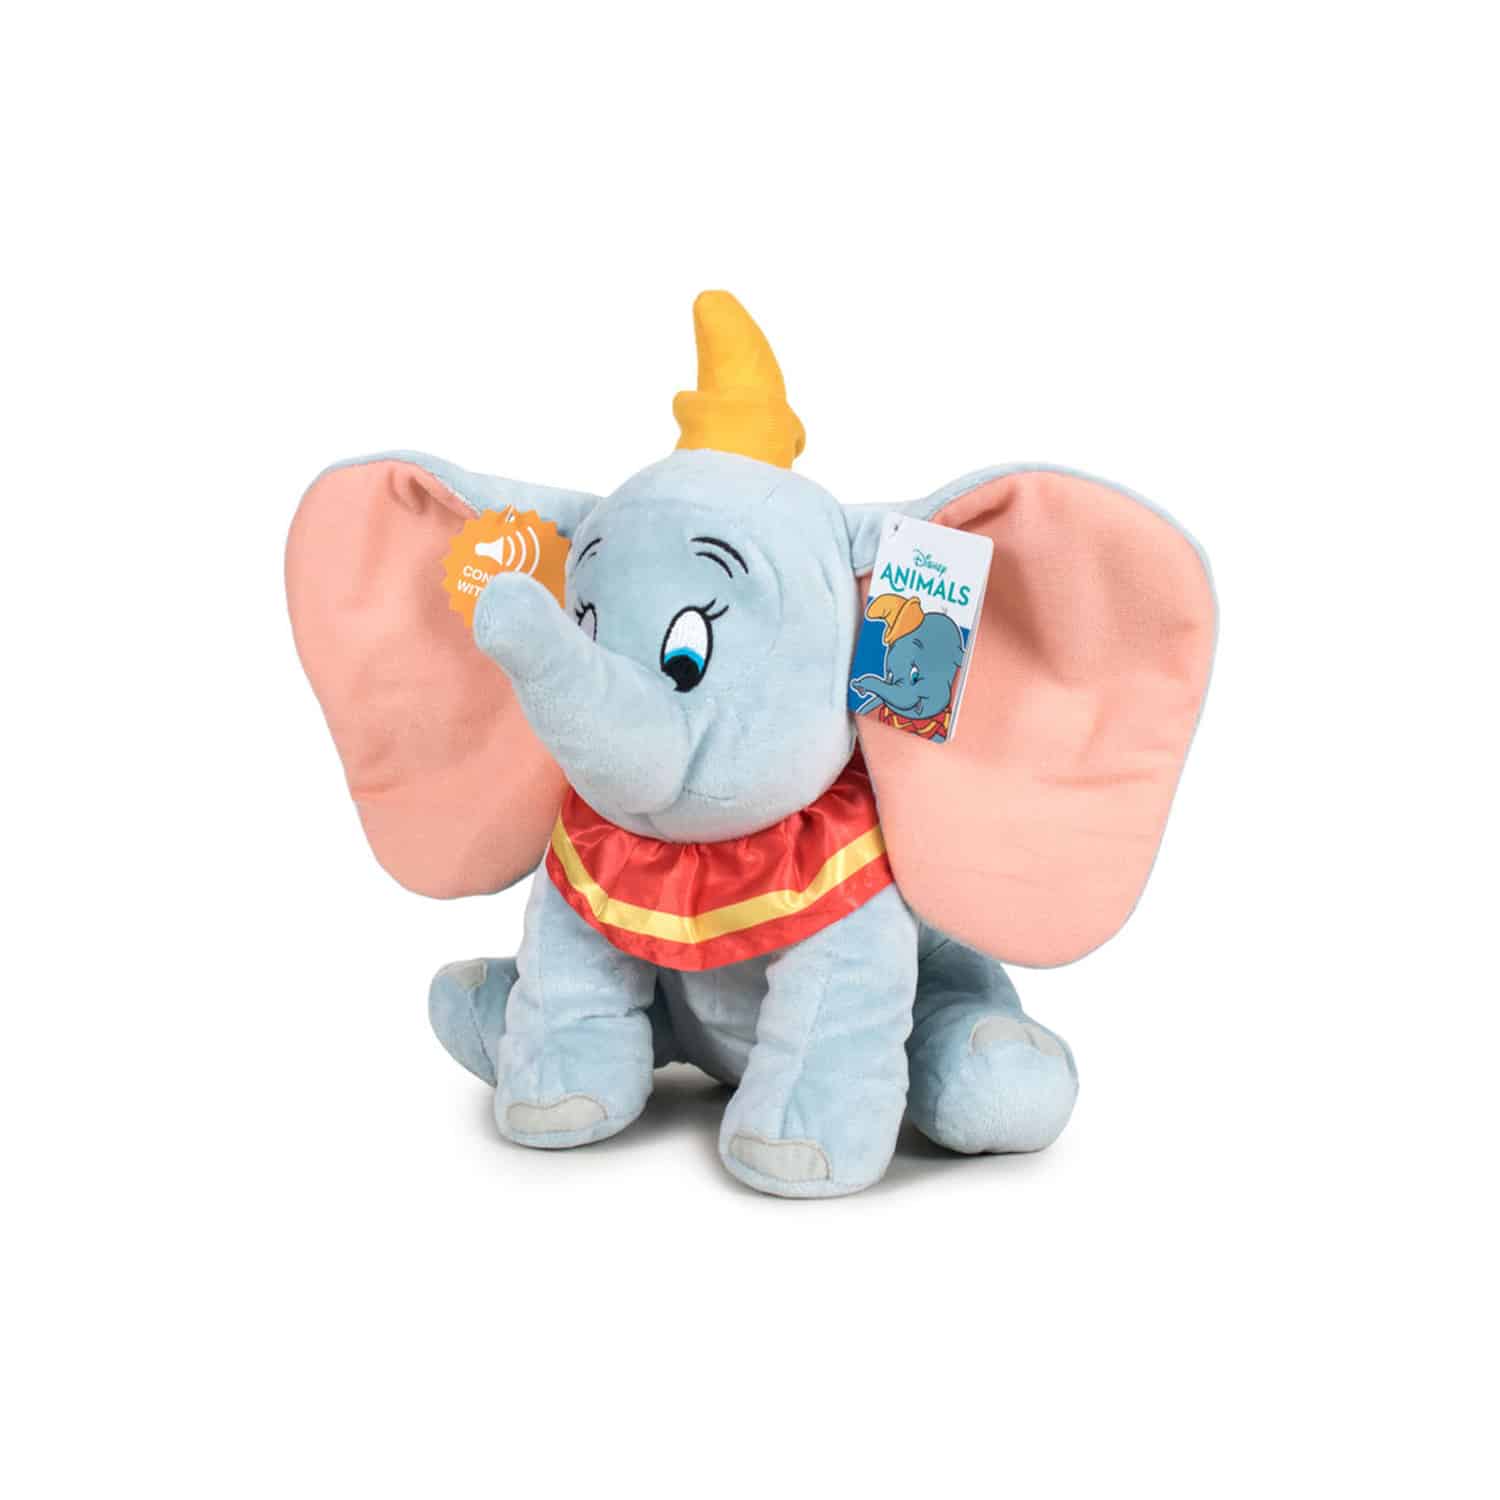 Dumbo -  Dumbo Plush Toy with Sound